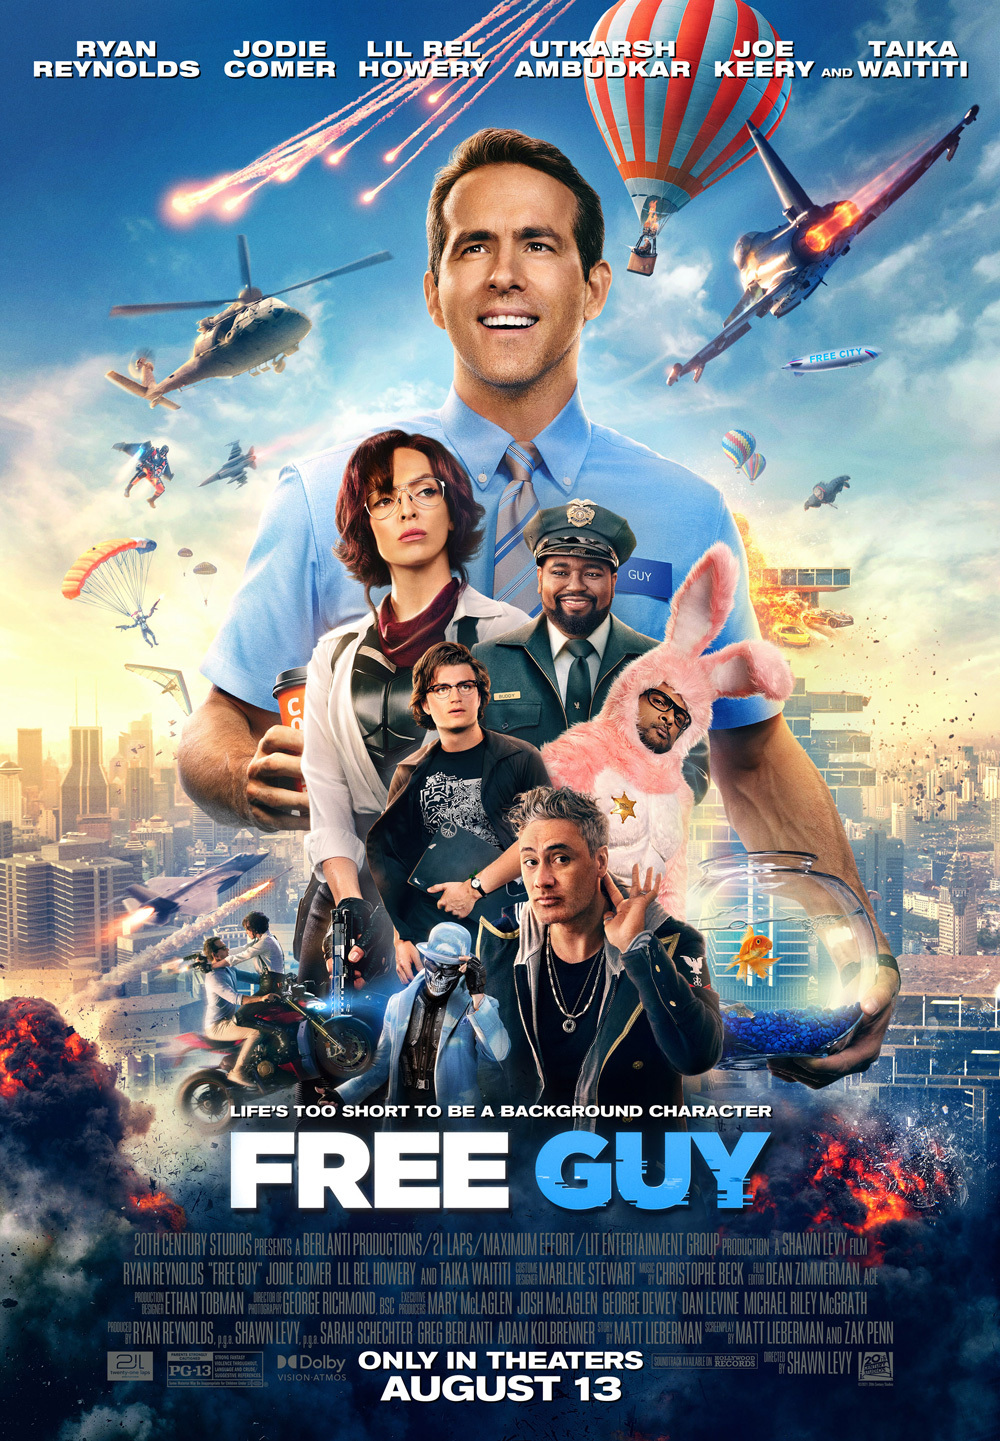 Freeguy poster